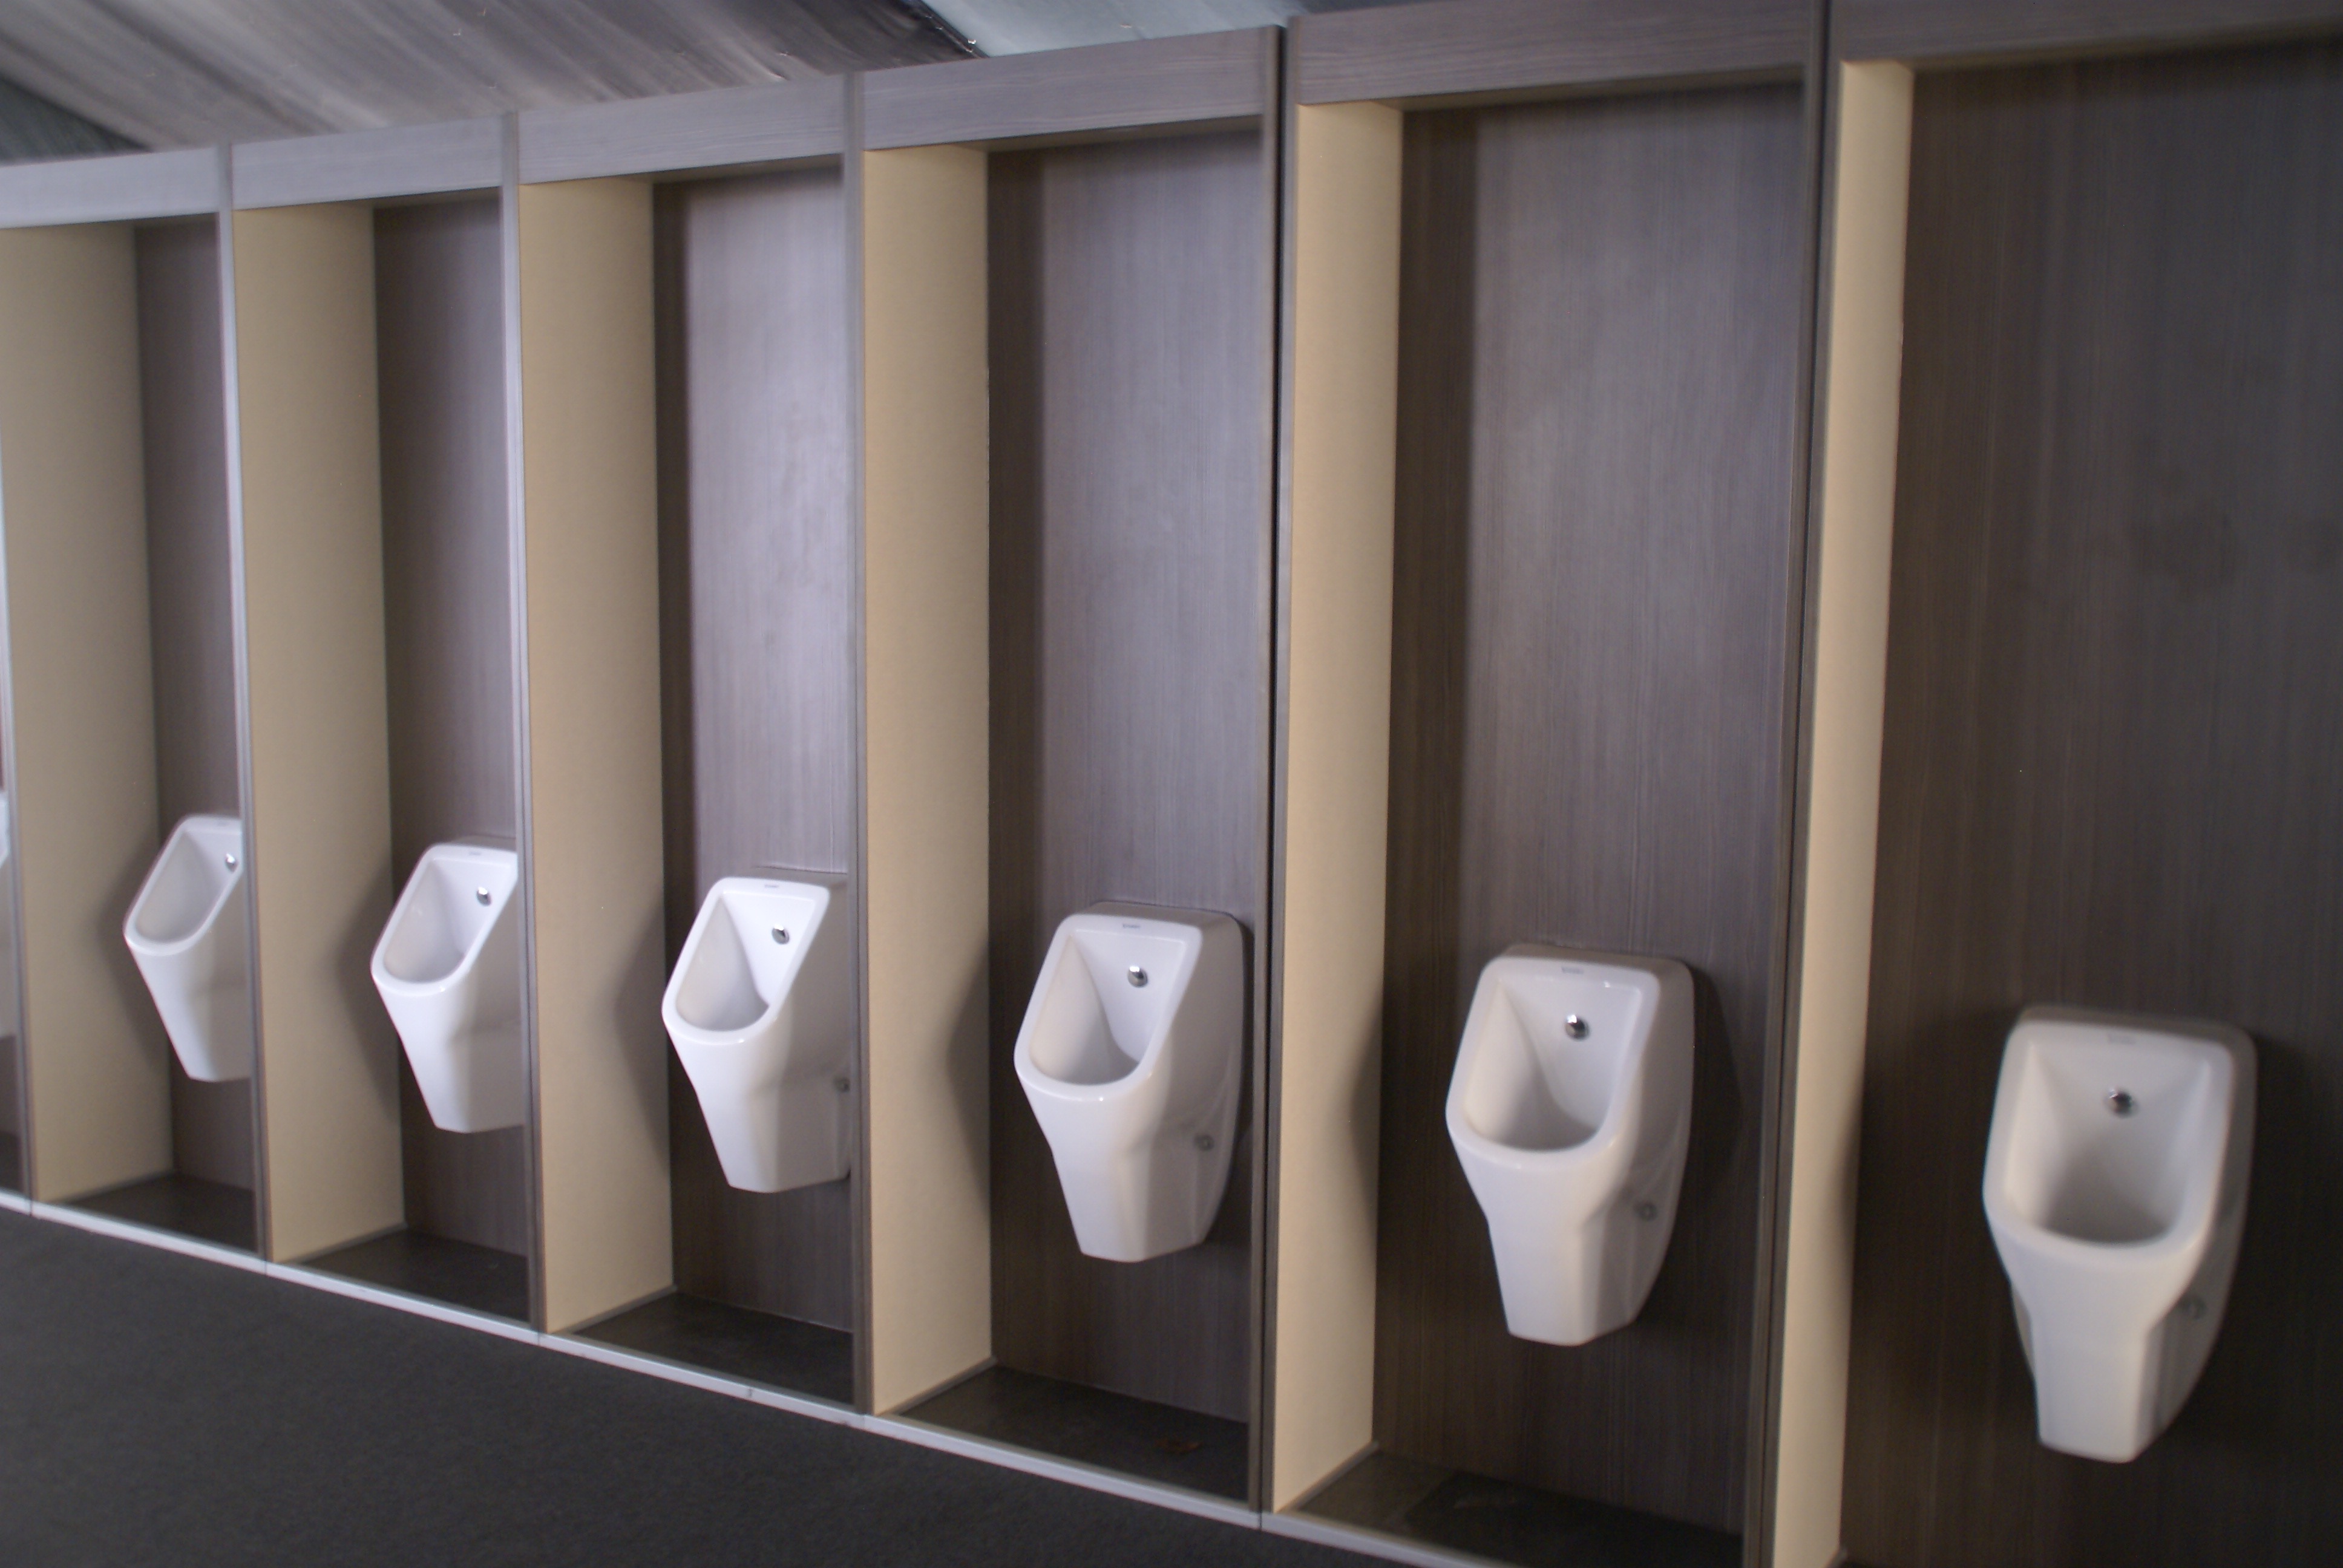 Flexiloo row of urinals